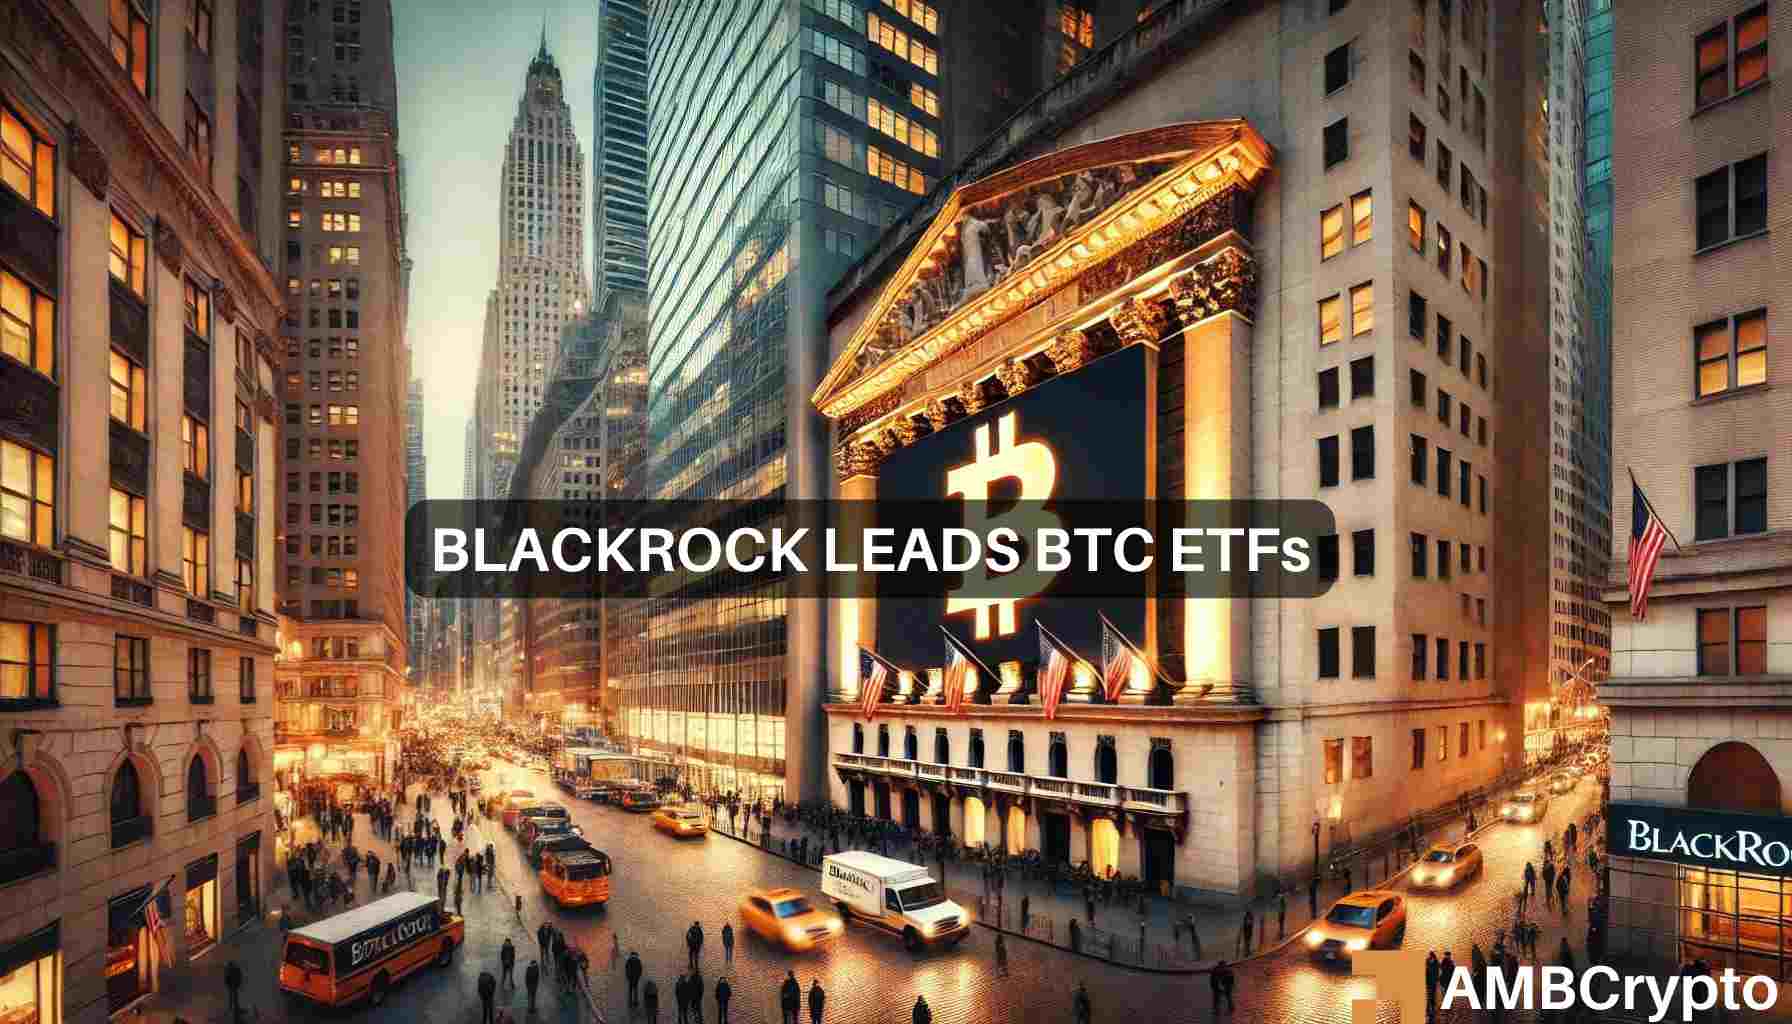 Bitcoin ETFs net flows cross $16B, led by BlackRock – What’s next for BTC?